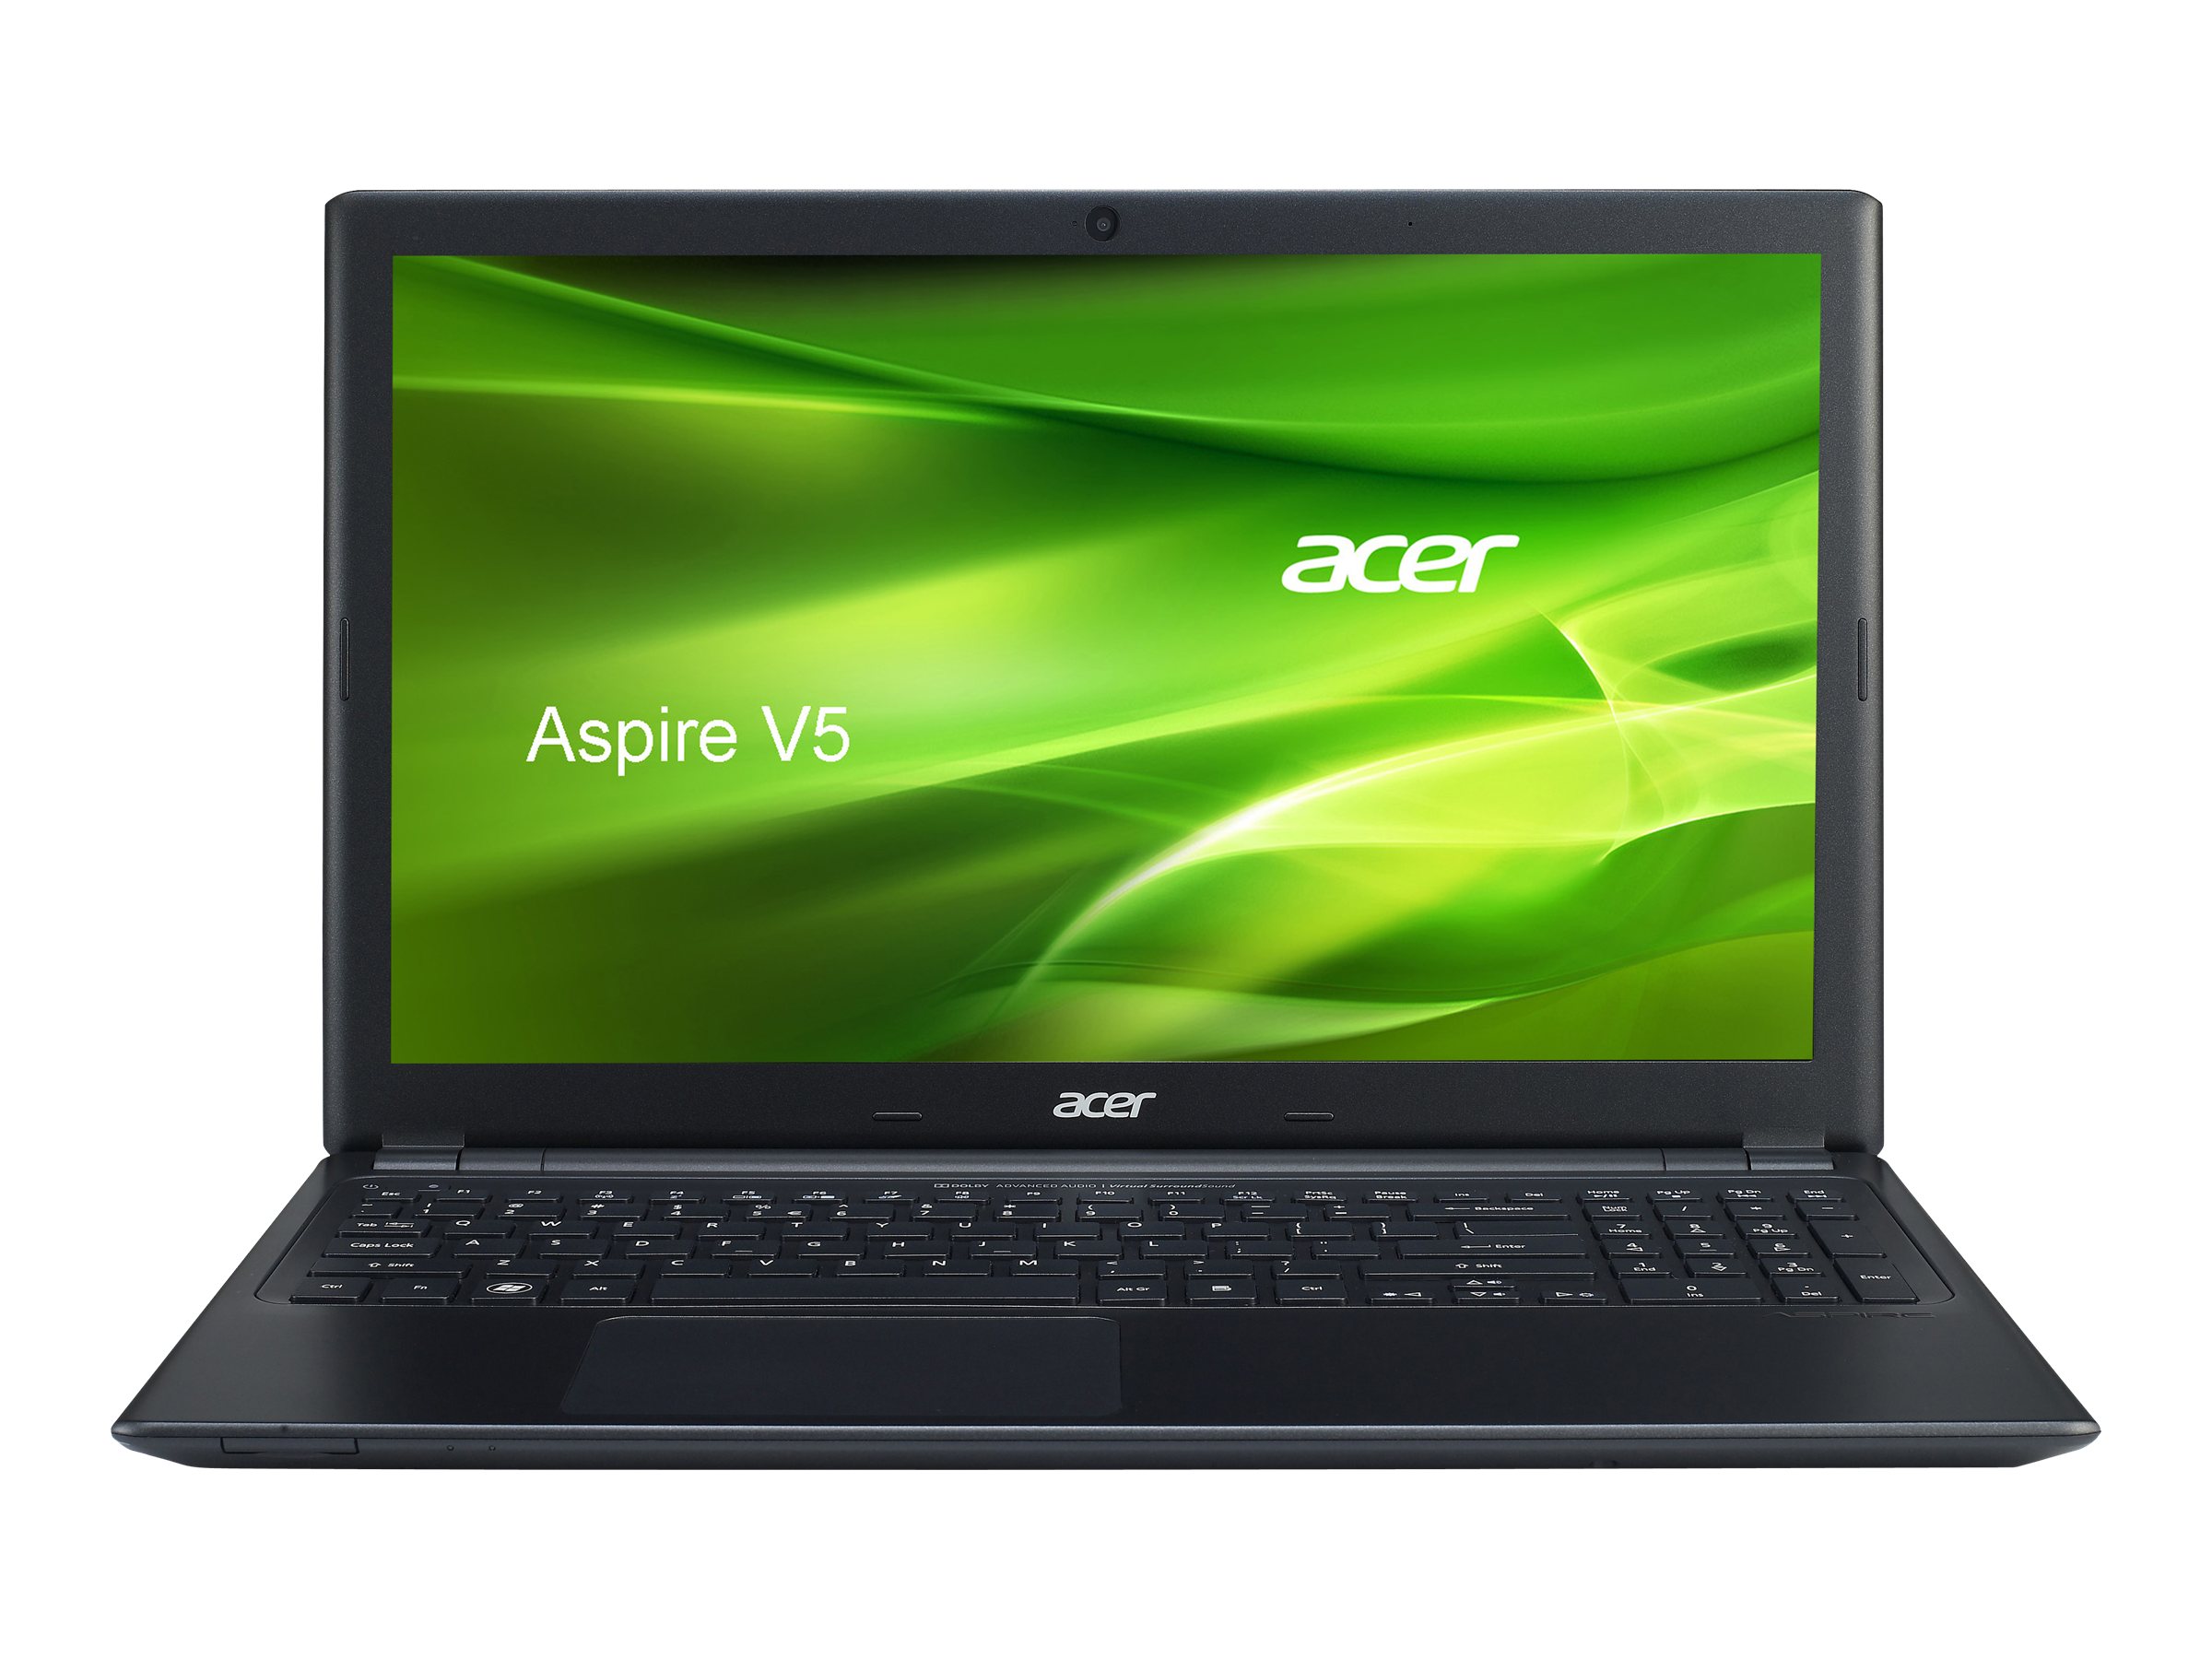 Acer Aspire V5 (551)